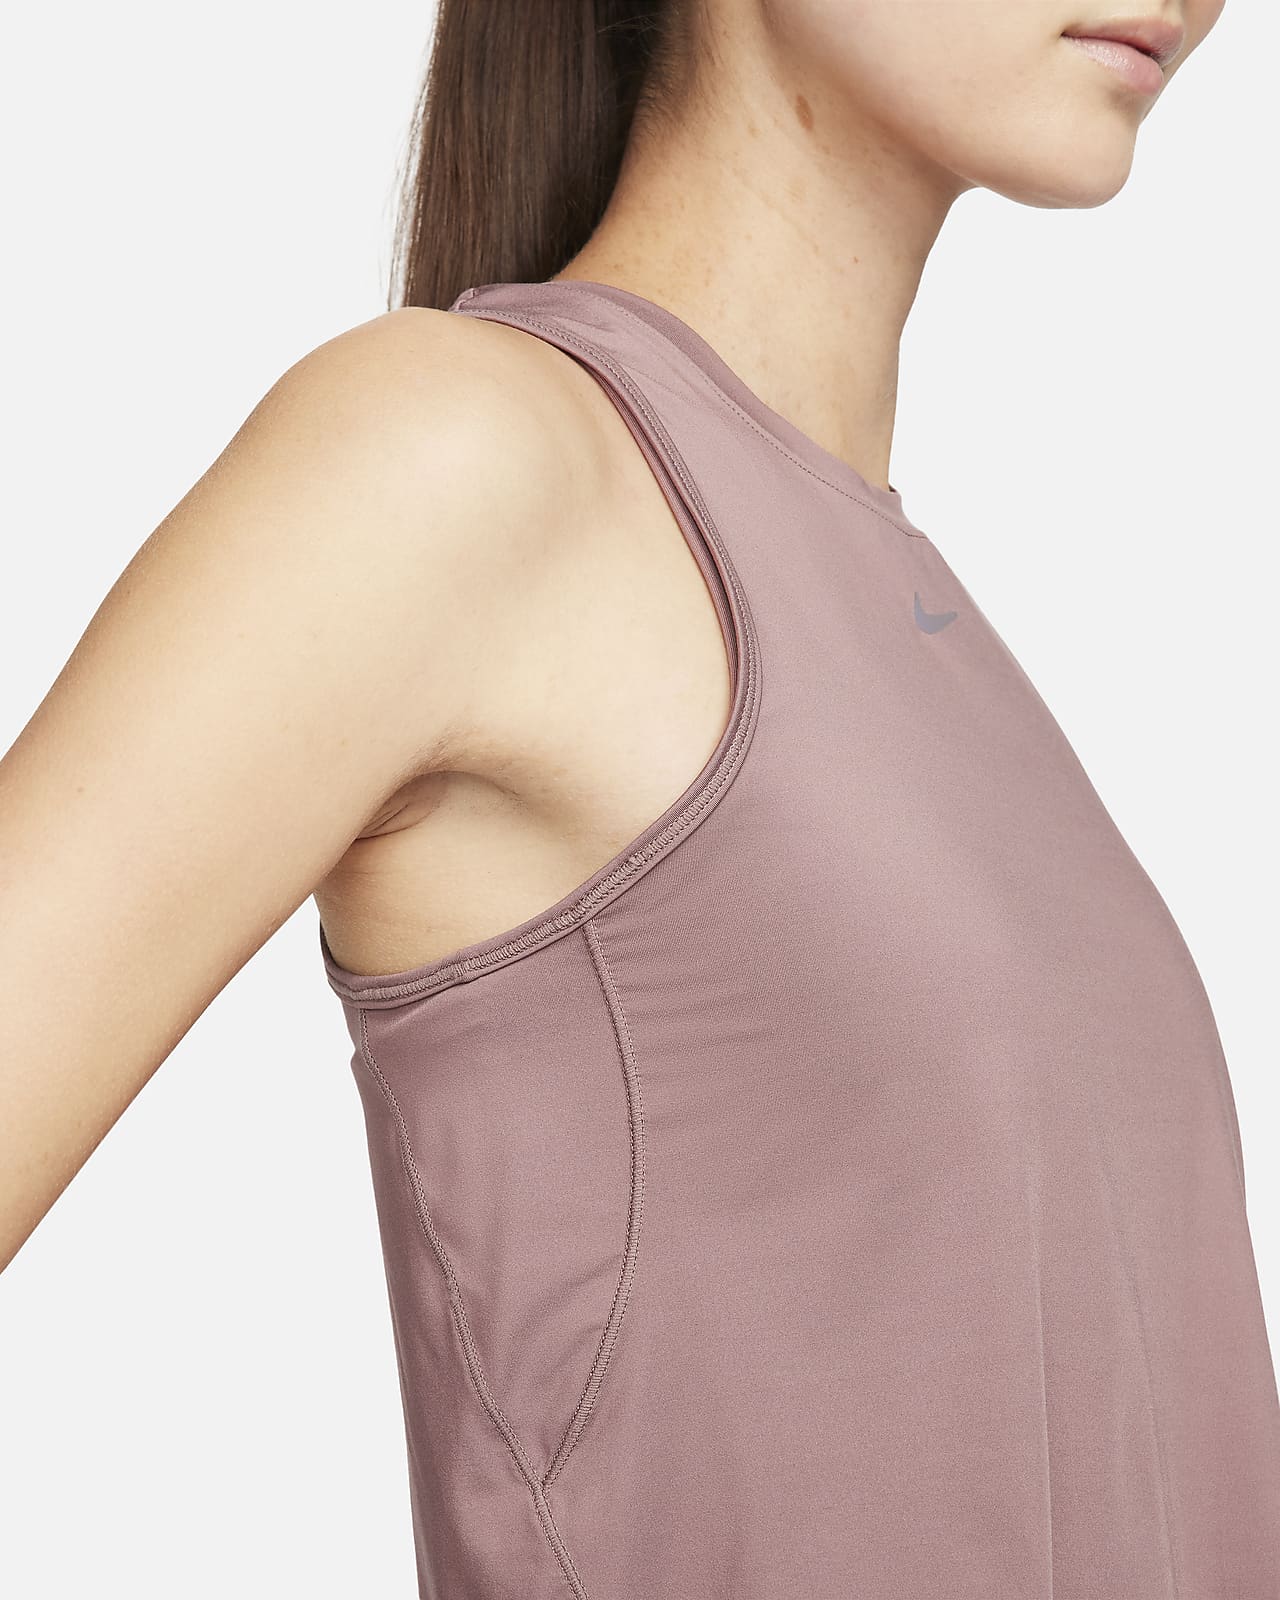 Women's Dri-FIT Tank Tops & Sleeveless Shirts. Nike CA